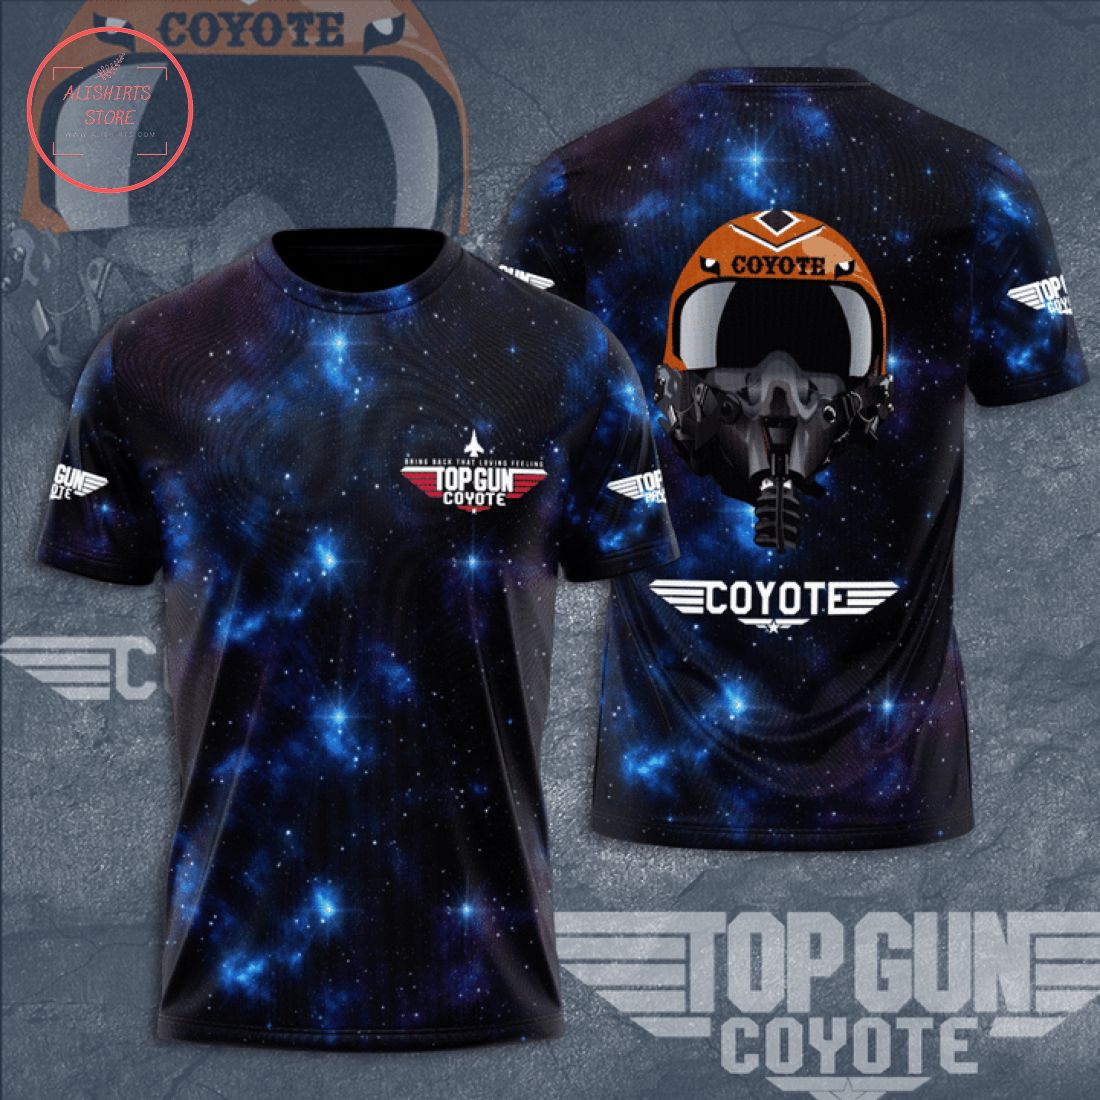 Top Gun Coyote All Over Printed Shirt